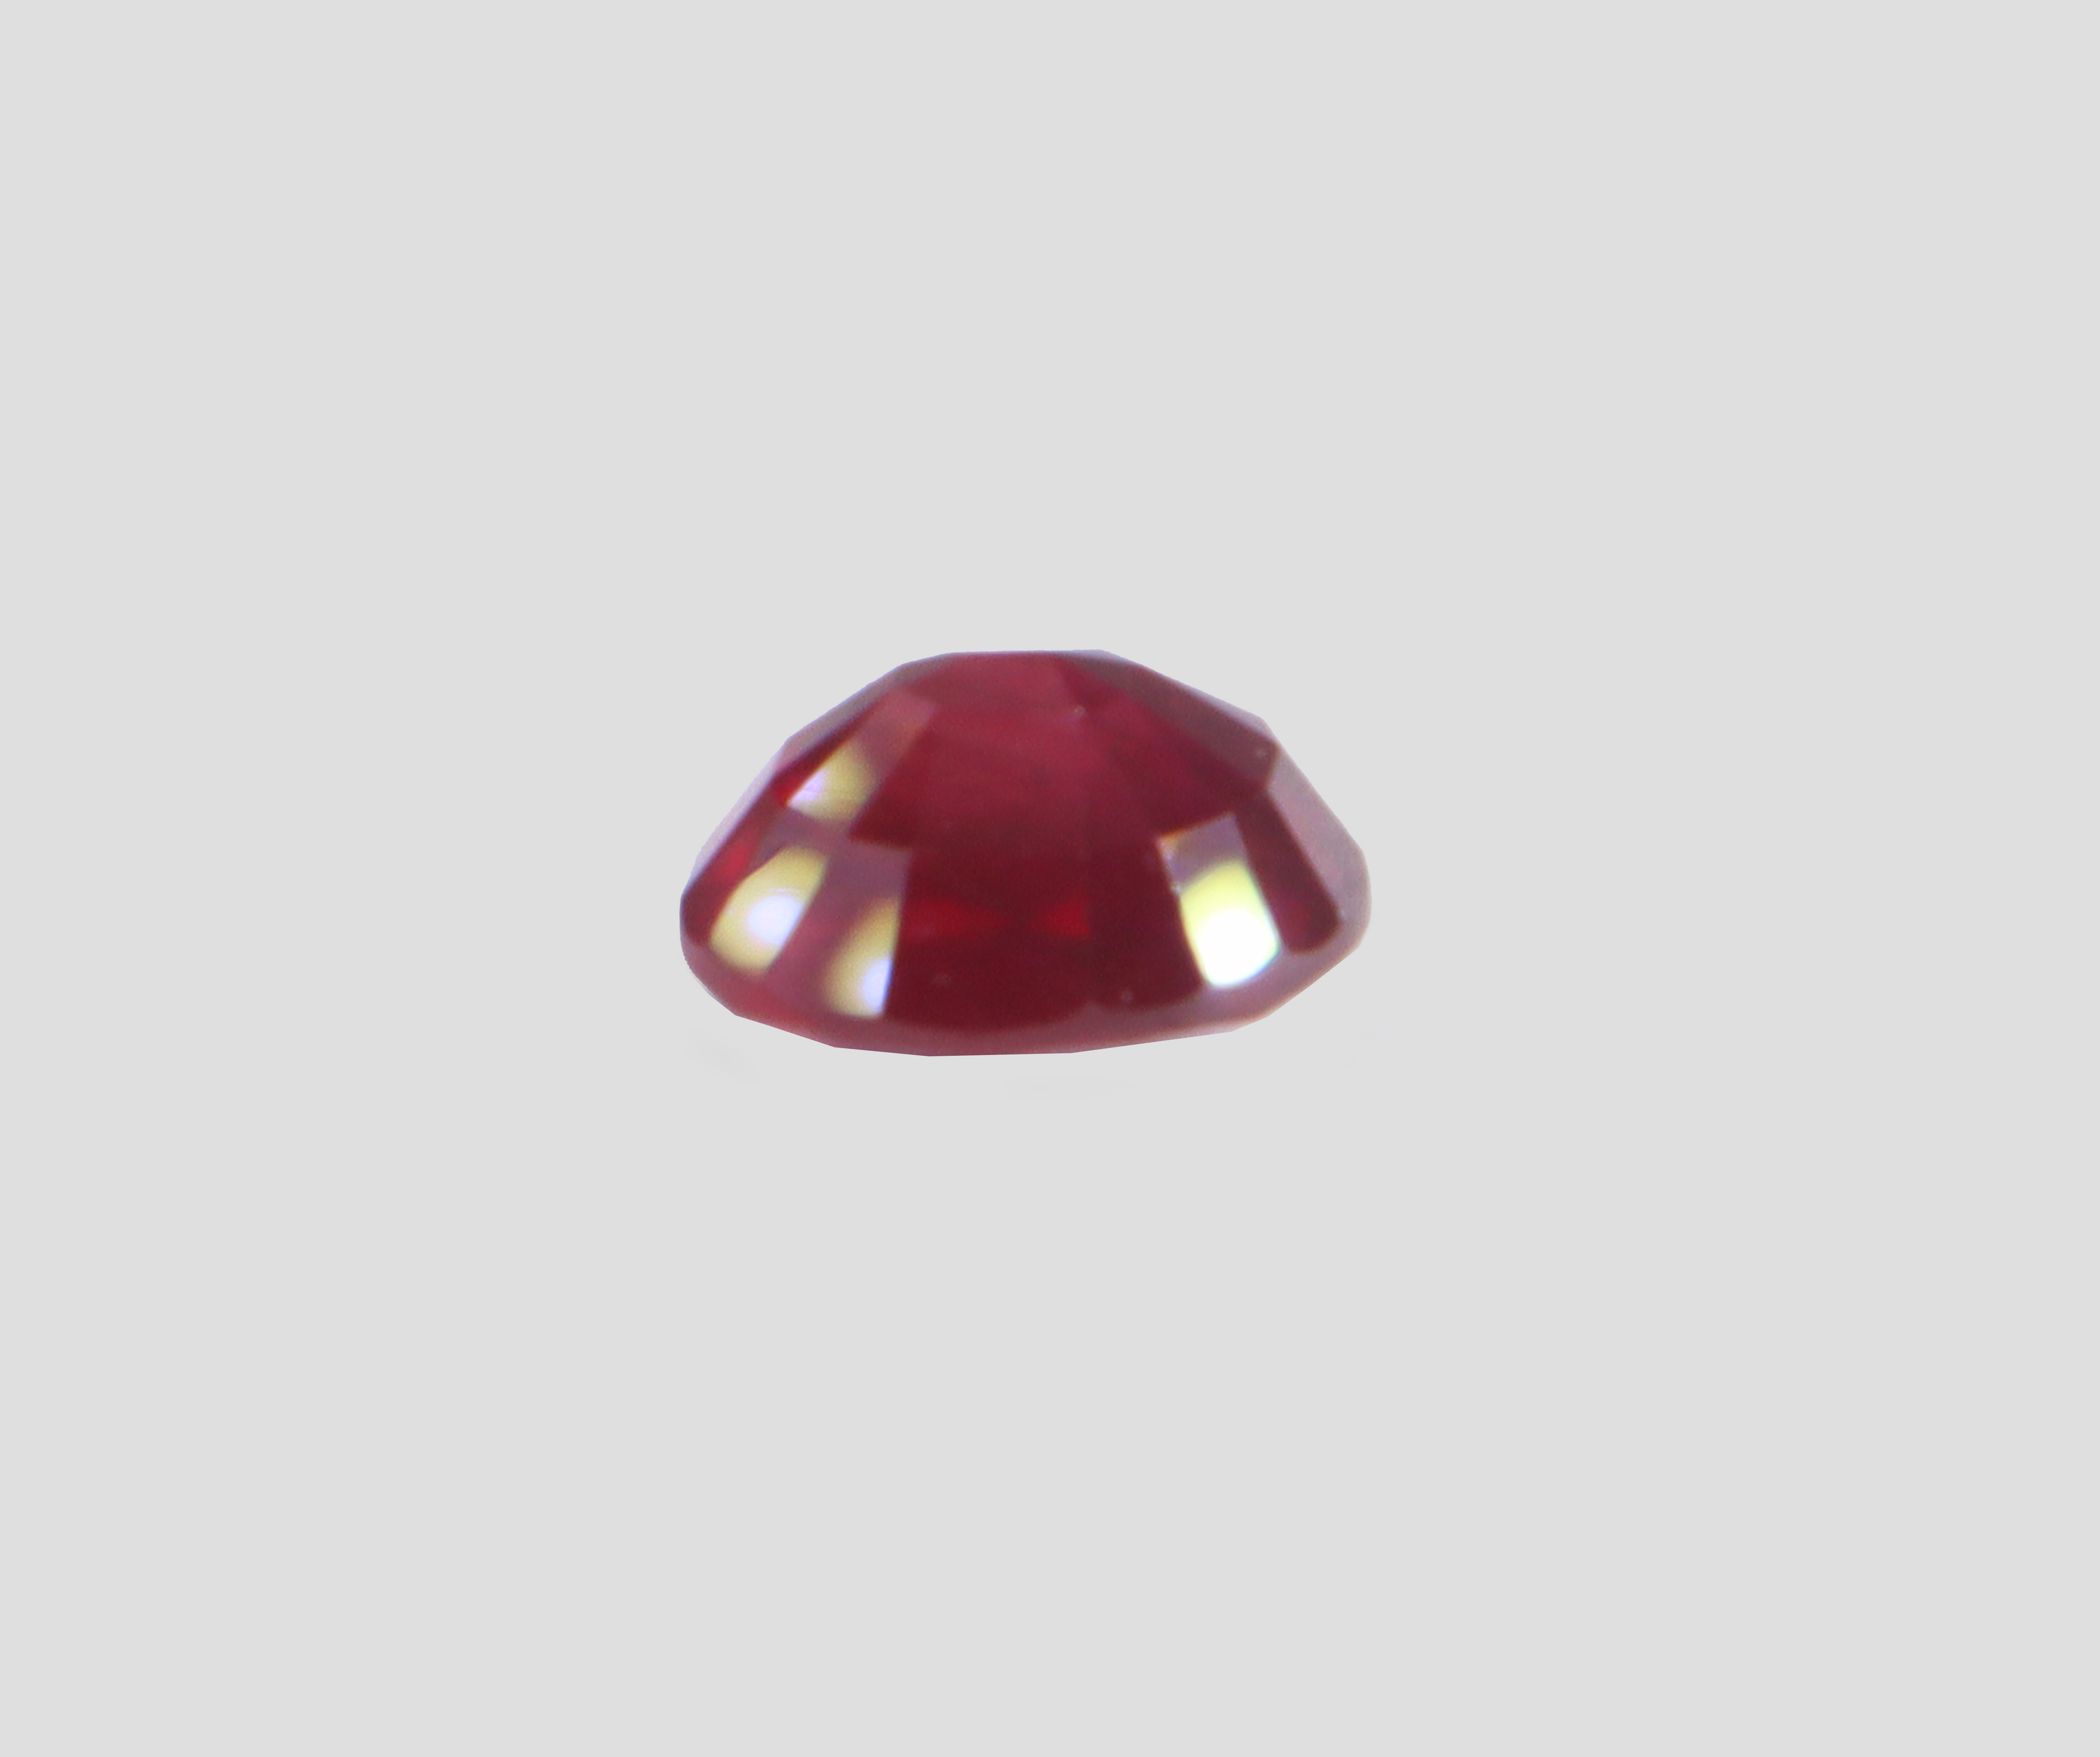 Ruby - 5.03 Carats (Thailand)